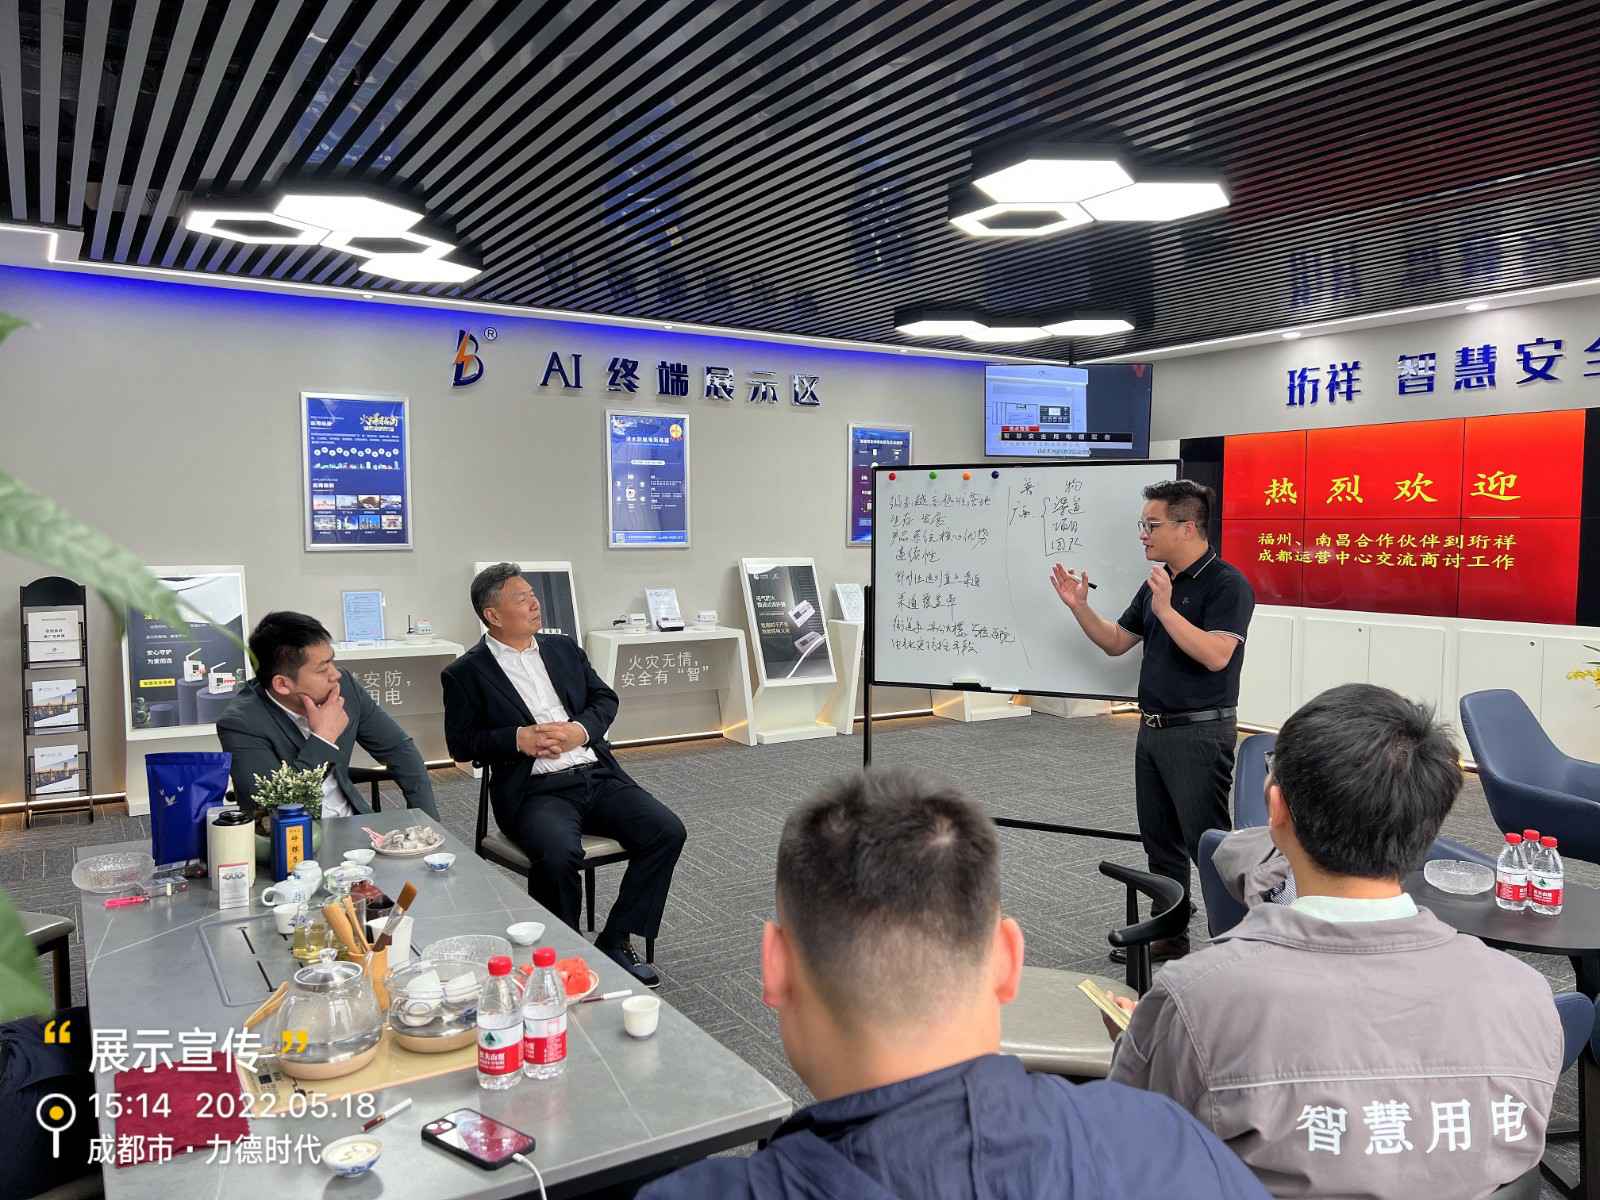 hg皇冠手机官网(中国)有限公司为中移铁通有限公司进行安全用电培训